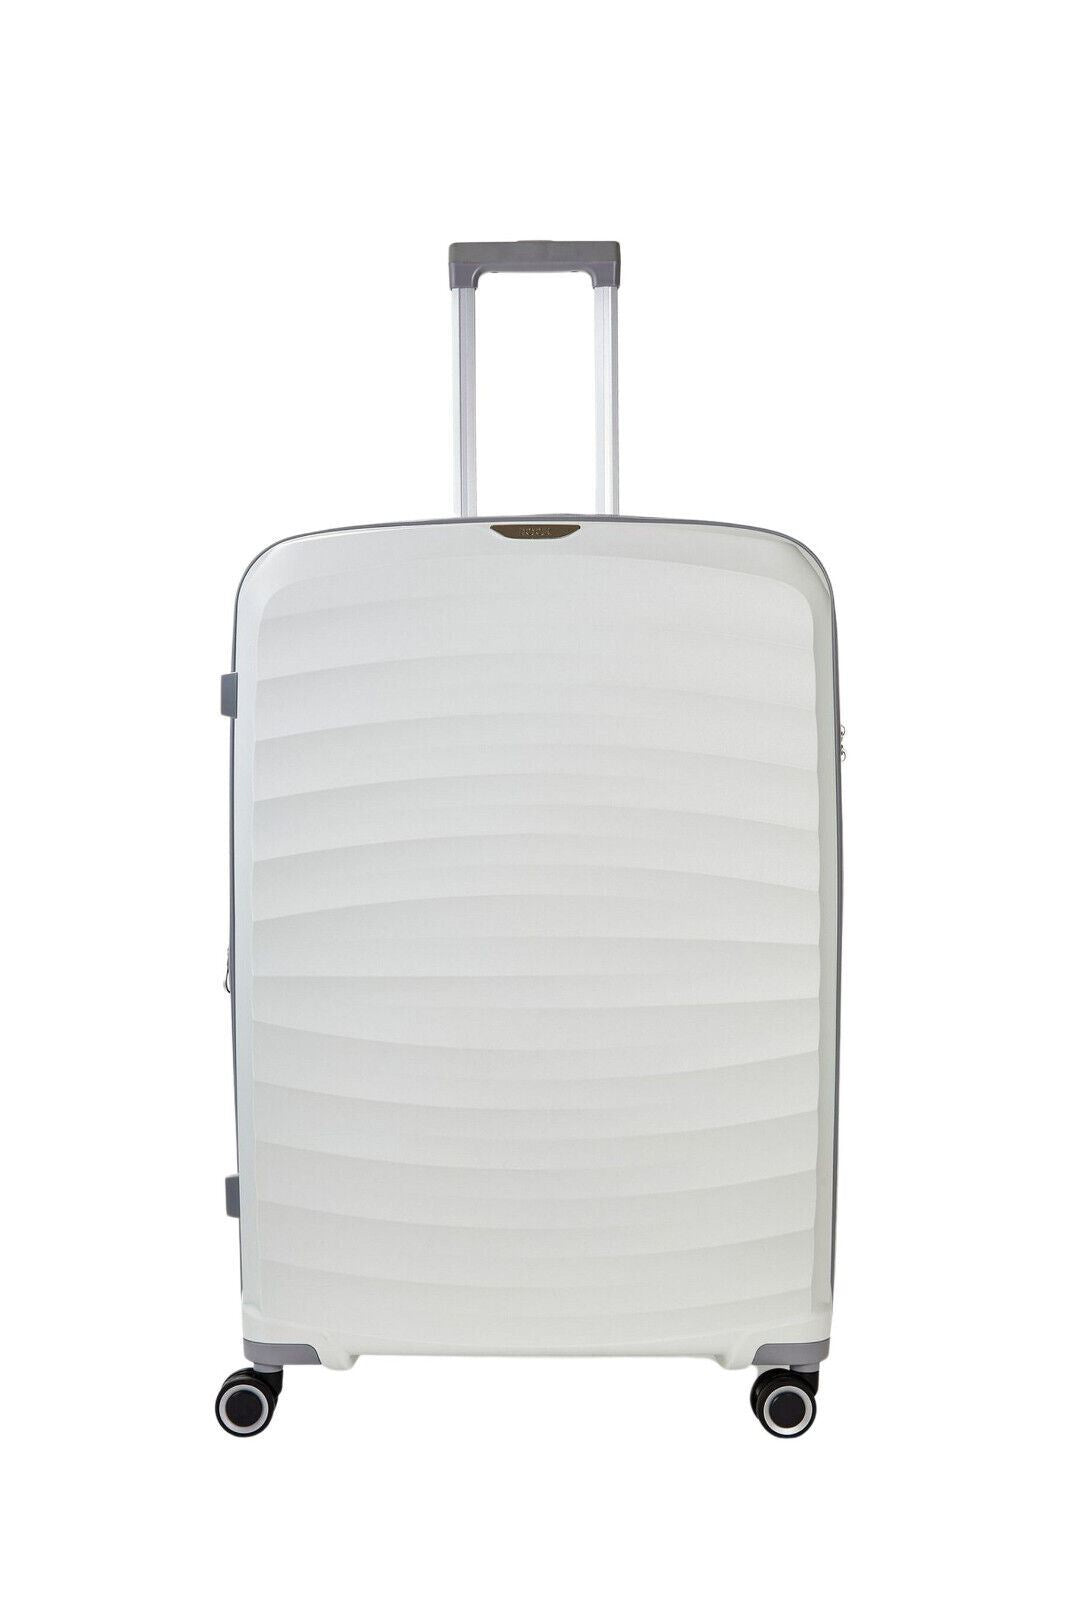 Altoona Large Hard Shell Suitcase in White